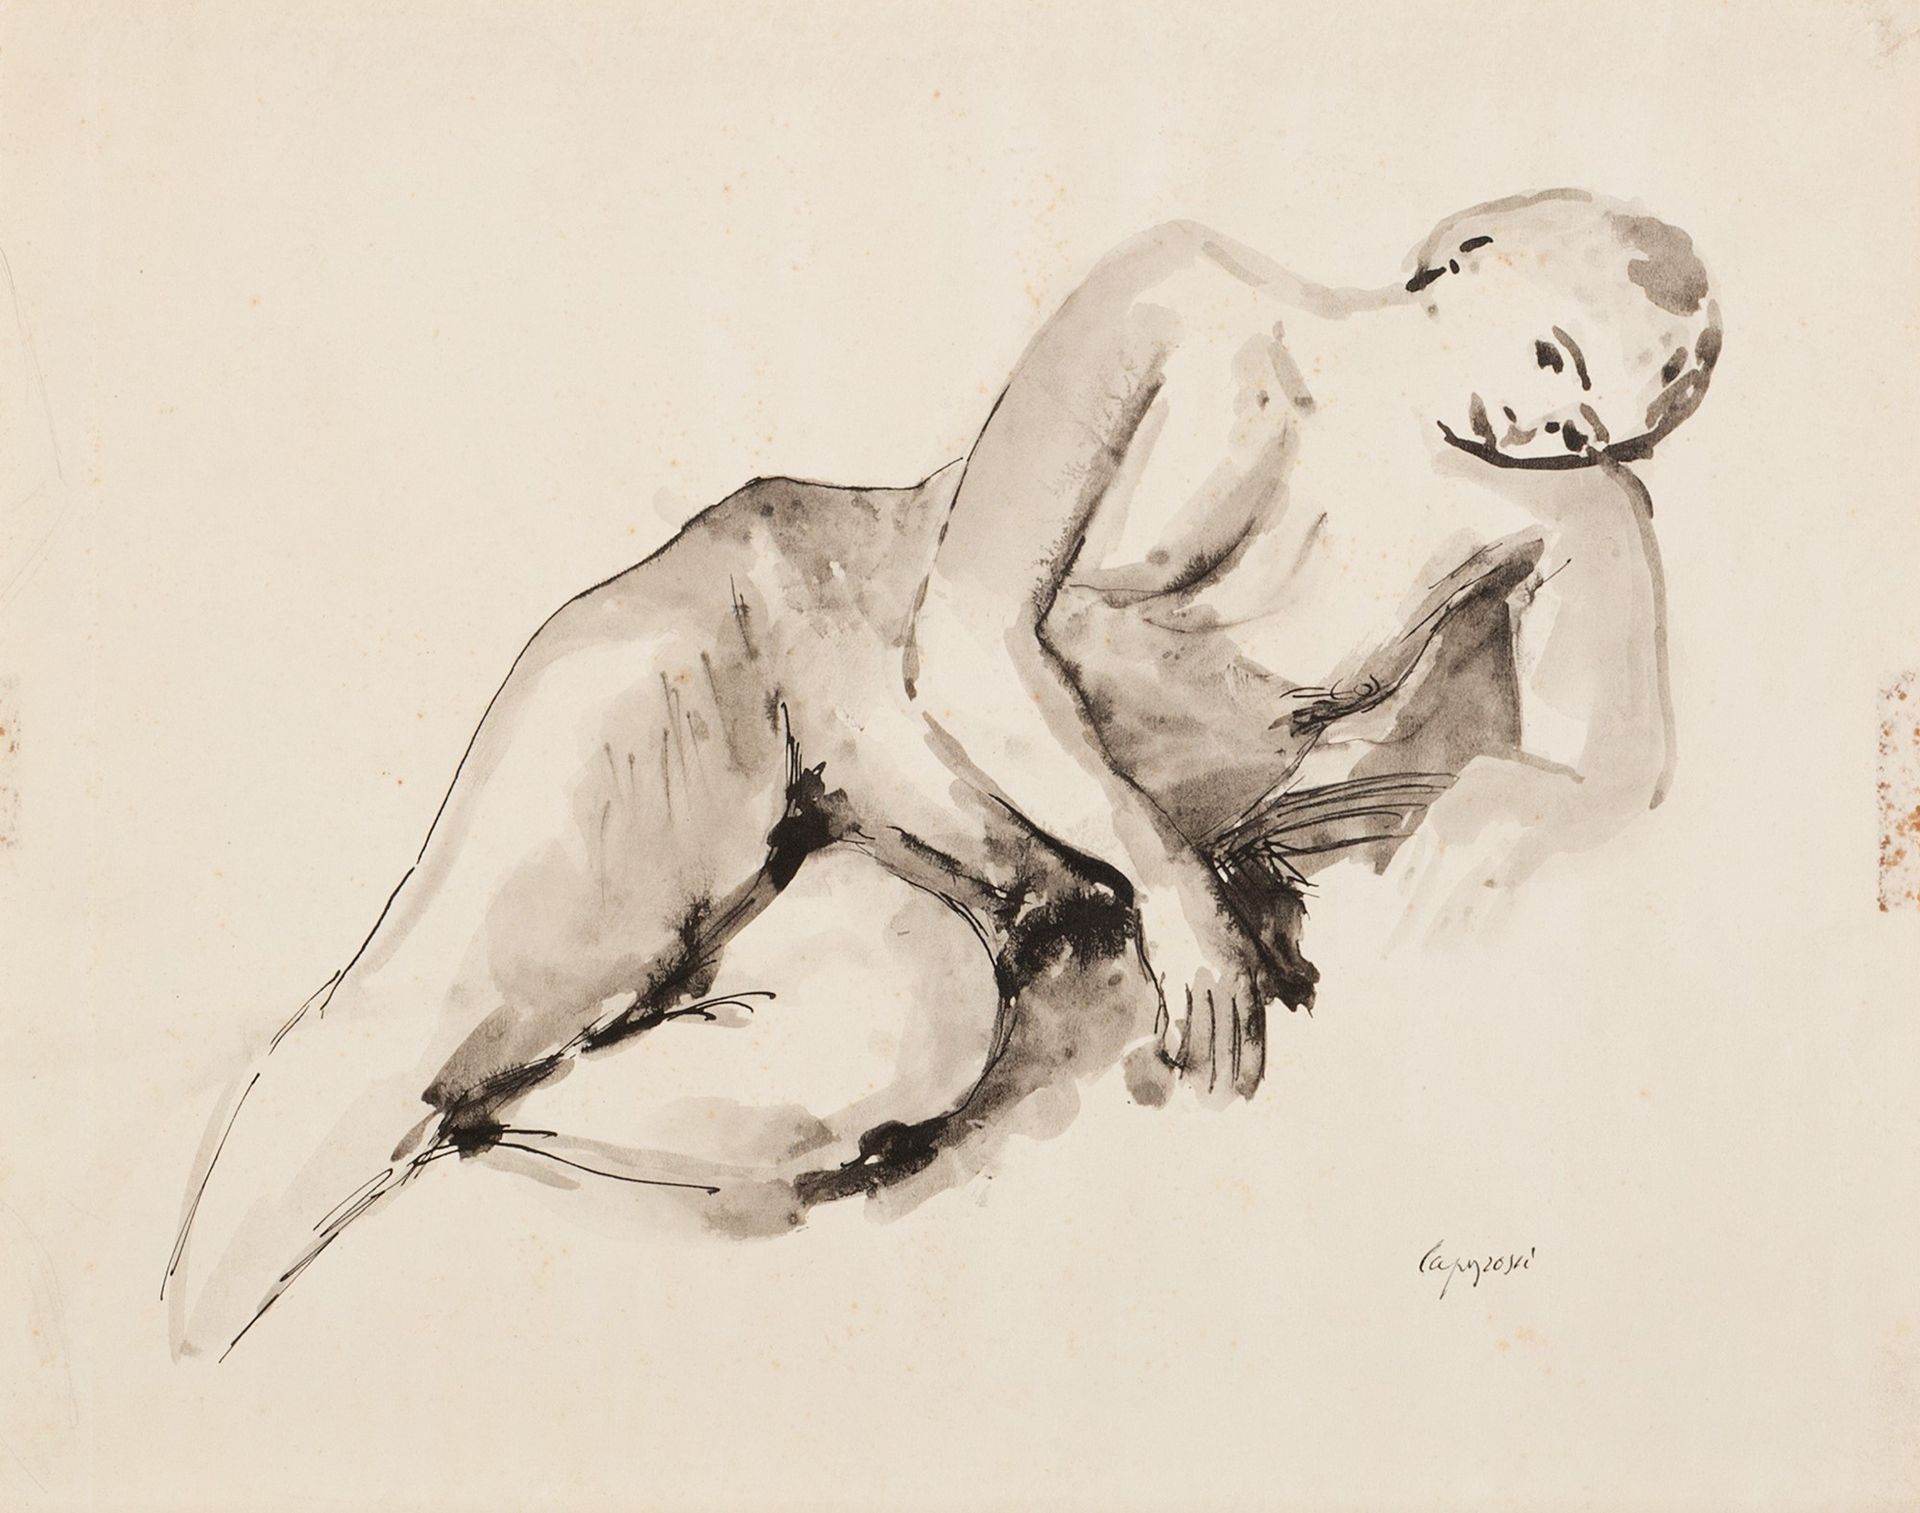 GIUSEPPE CAPOGROSSI Nu féminin allongé, 1942/44

encre de chine et aquarelle sur&hellip;